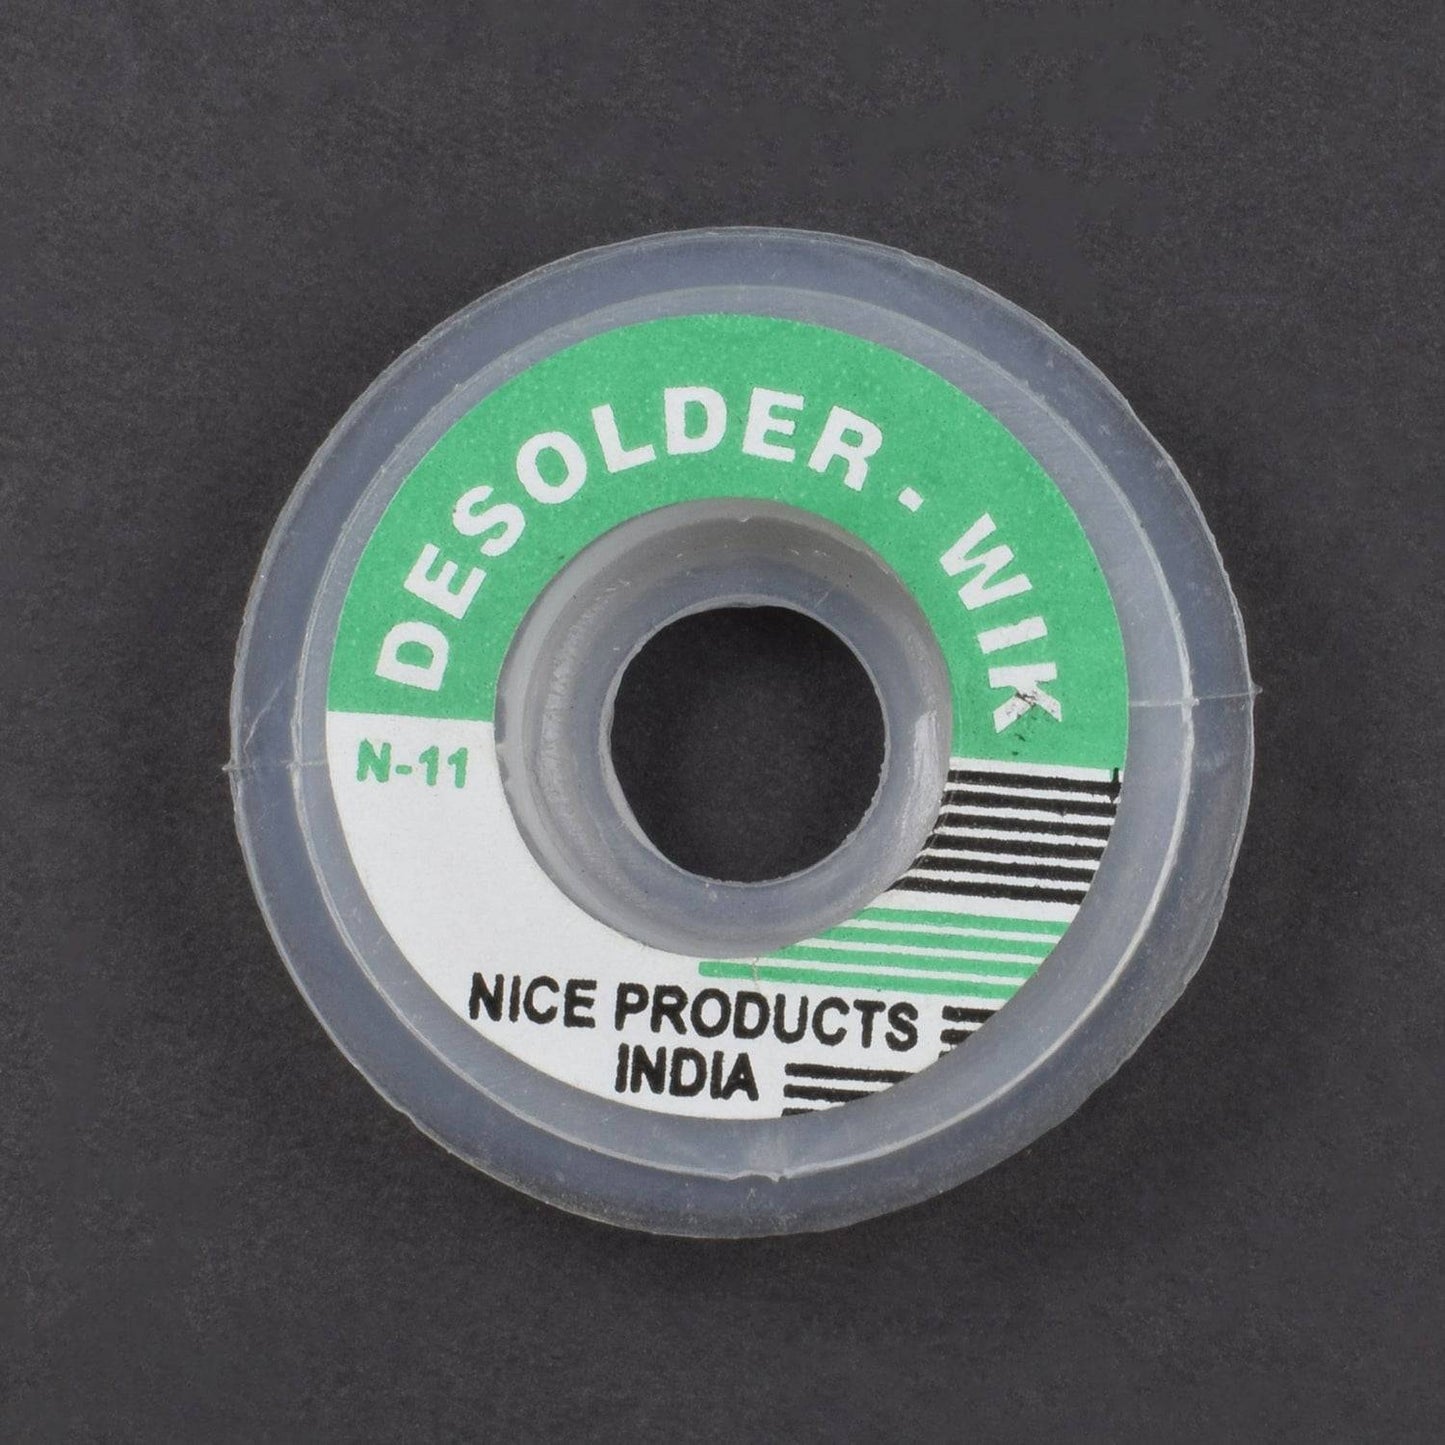 Best Quality Solder DeSoldering Wire (de-soldering wick)  - TL013 - REES52